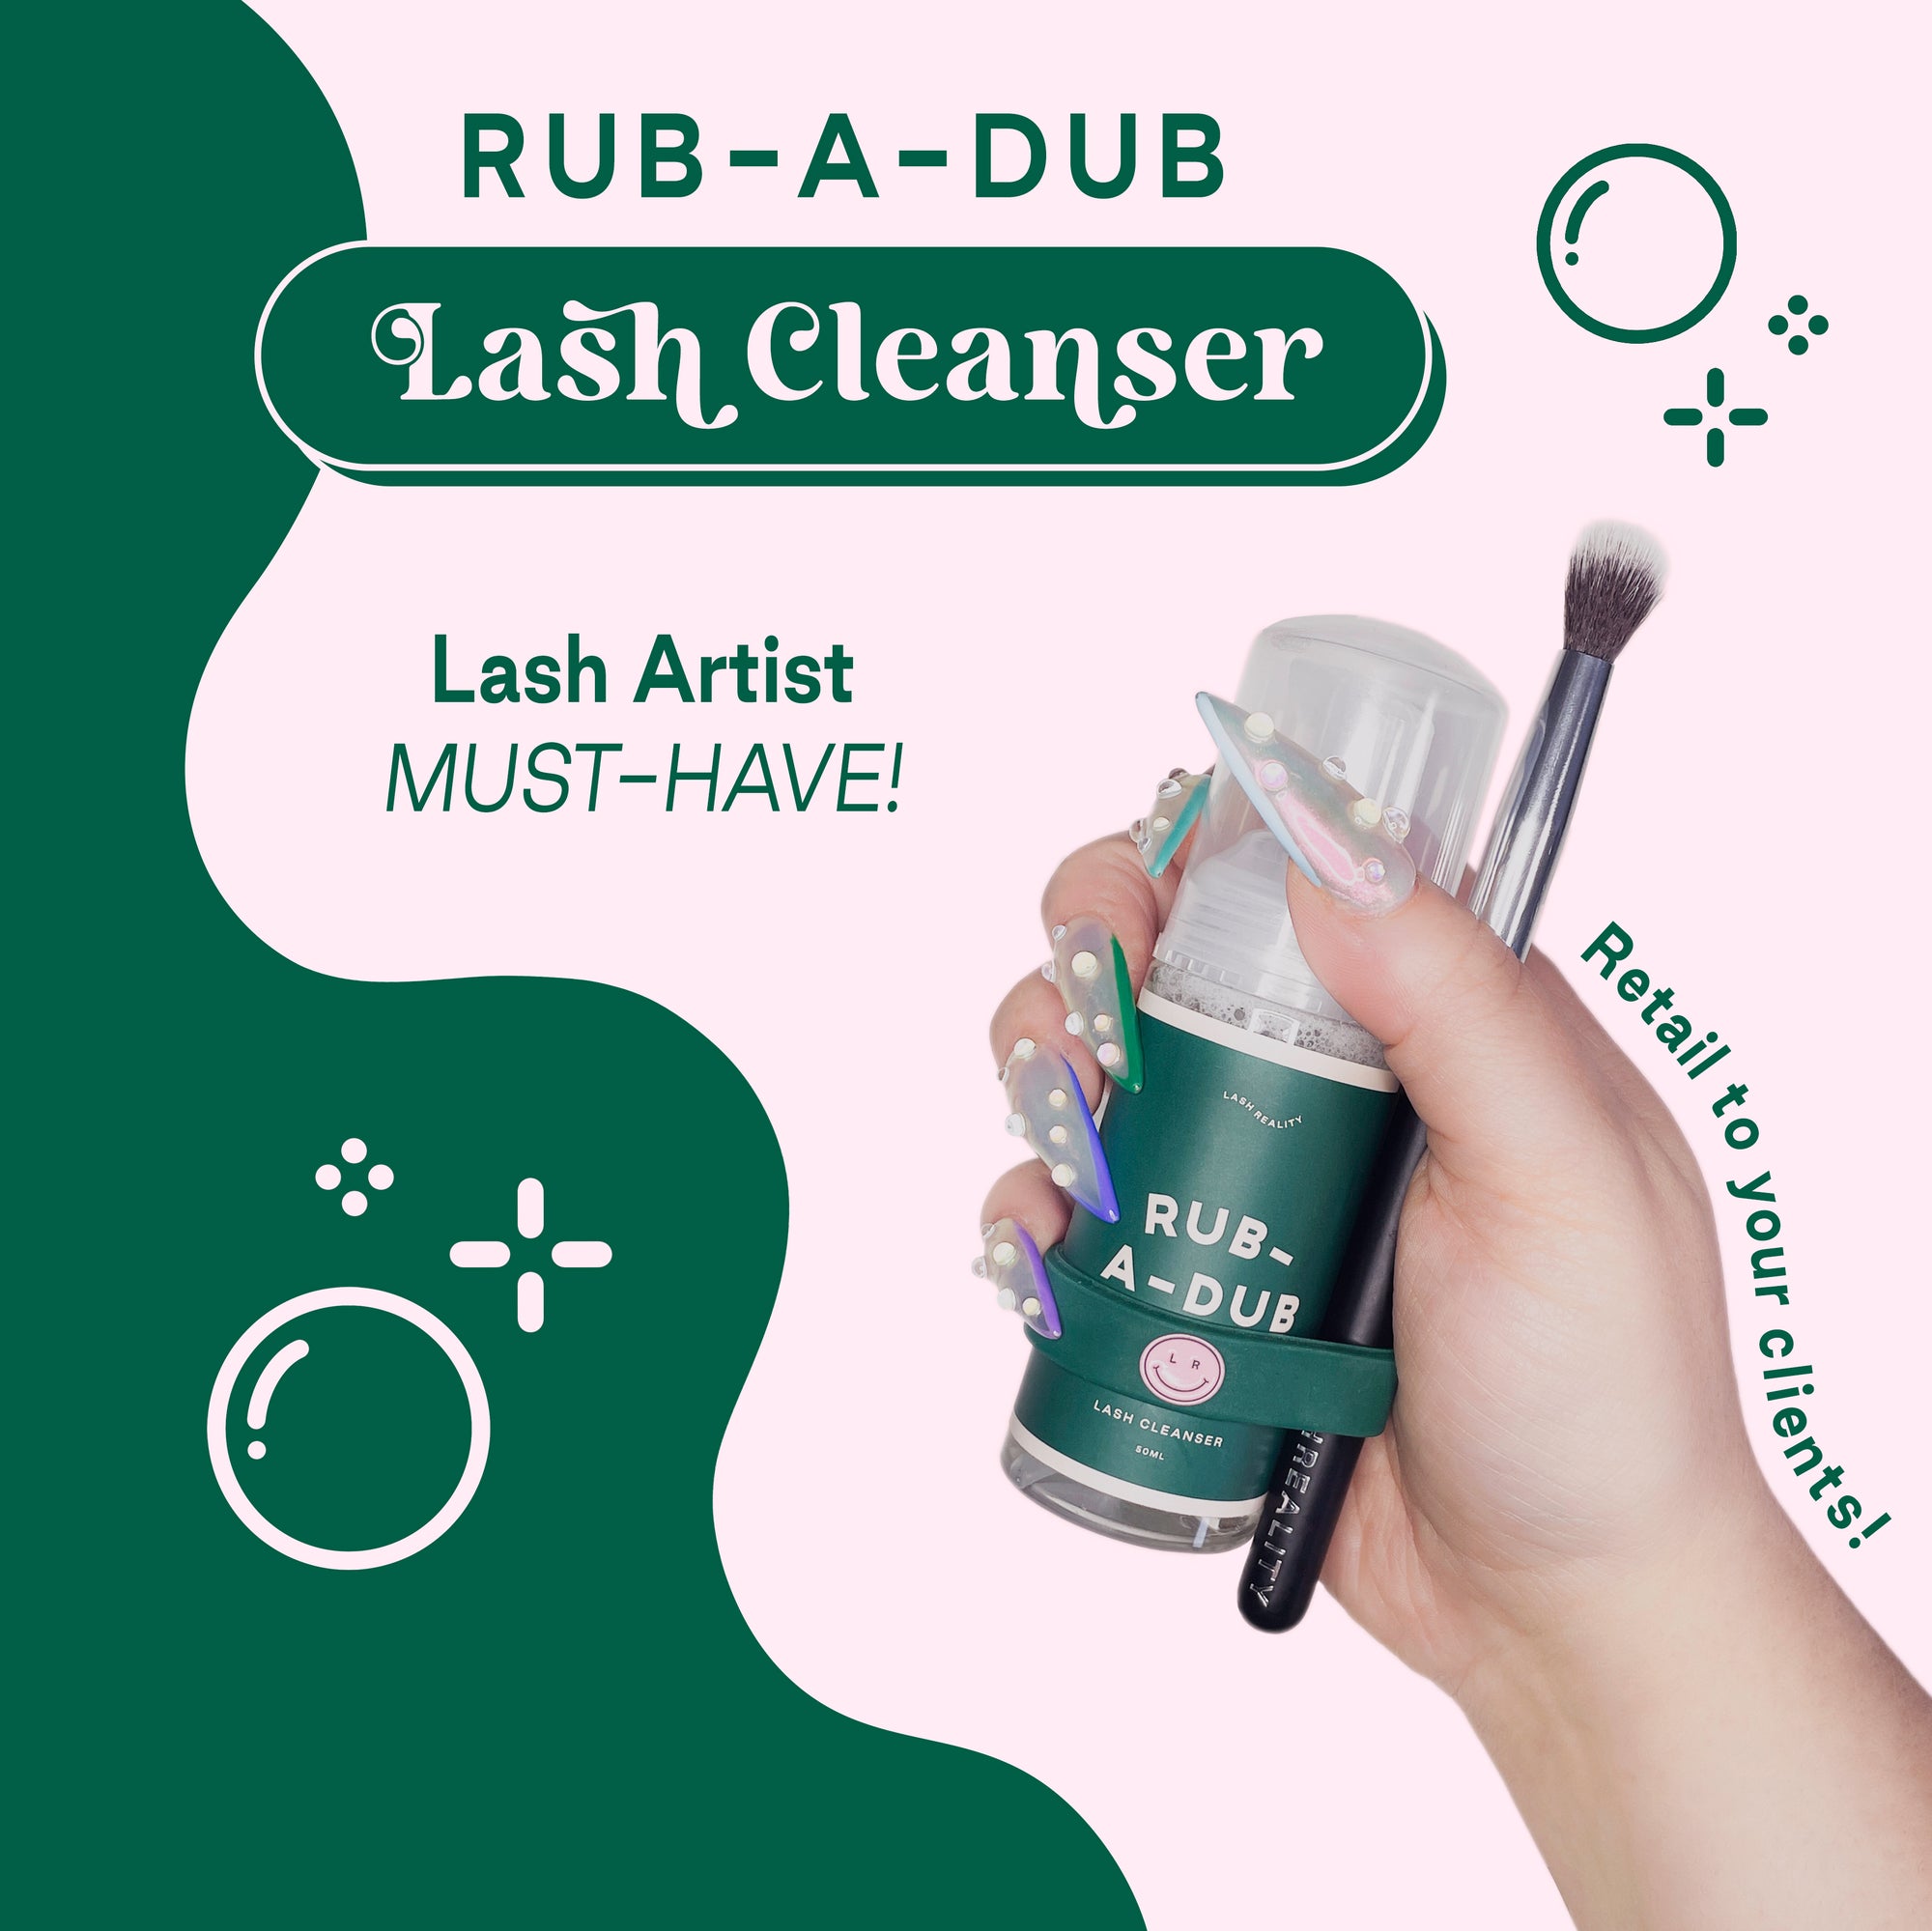 RUB-A-DUB Lash Cleanser